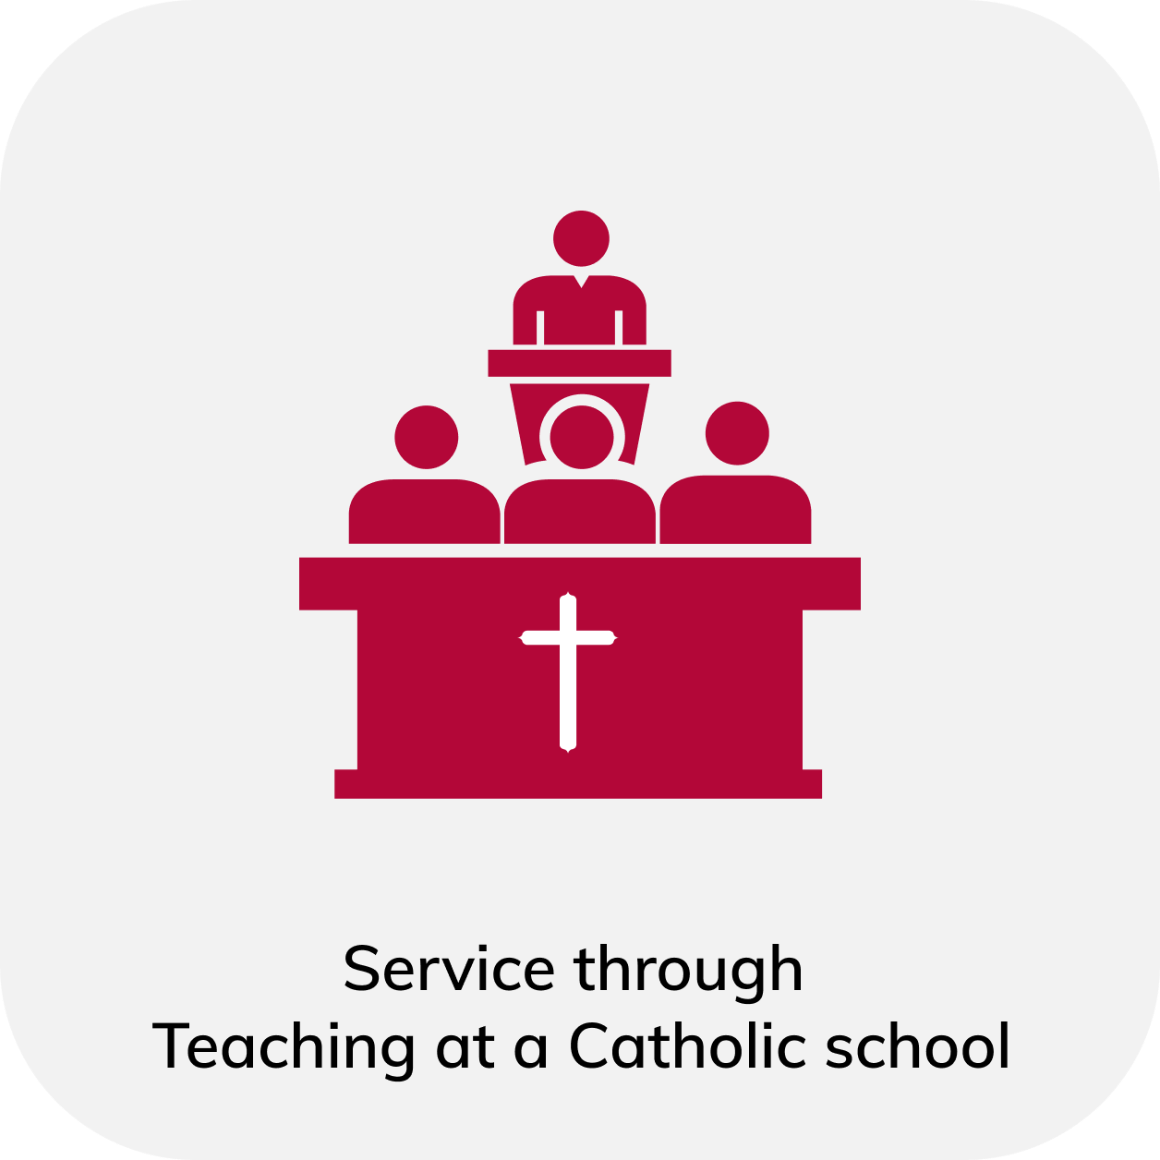 Service through teaching at a Catholic school